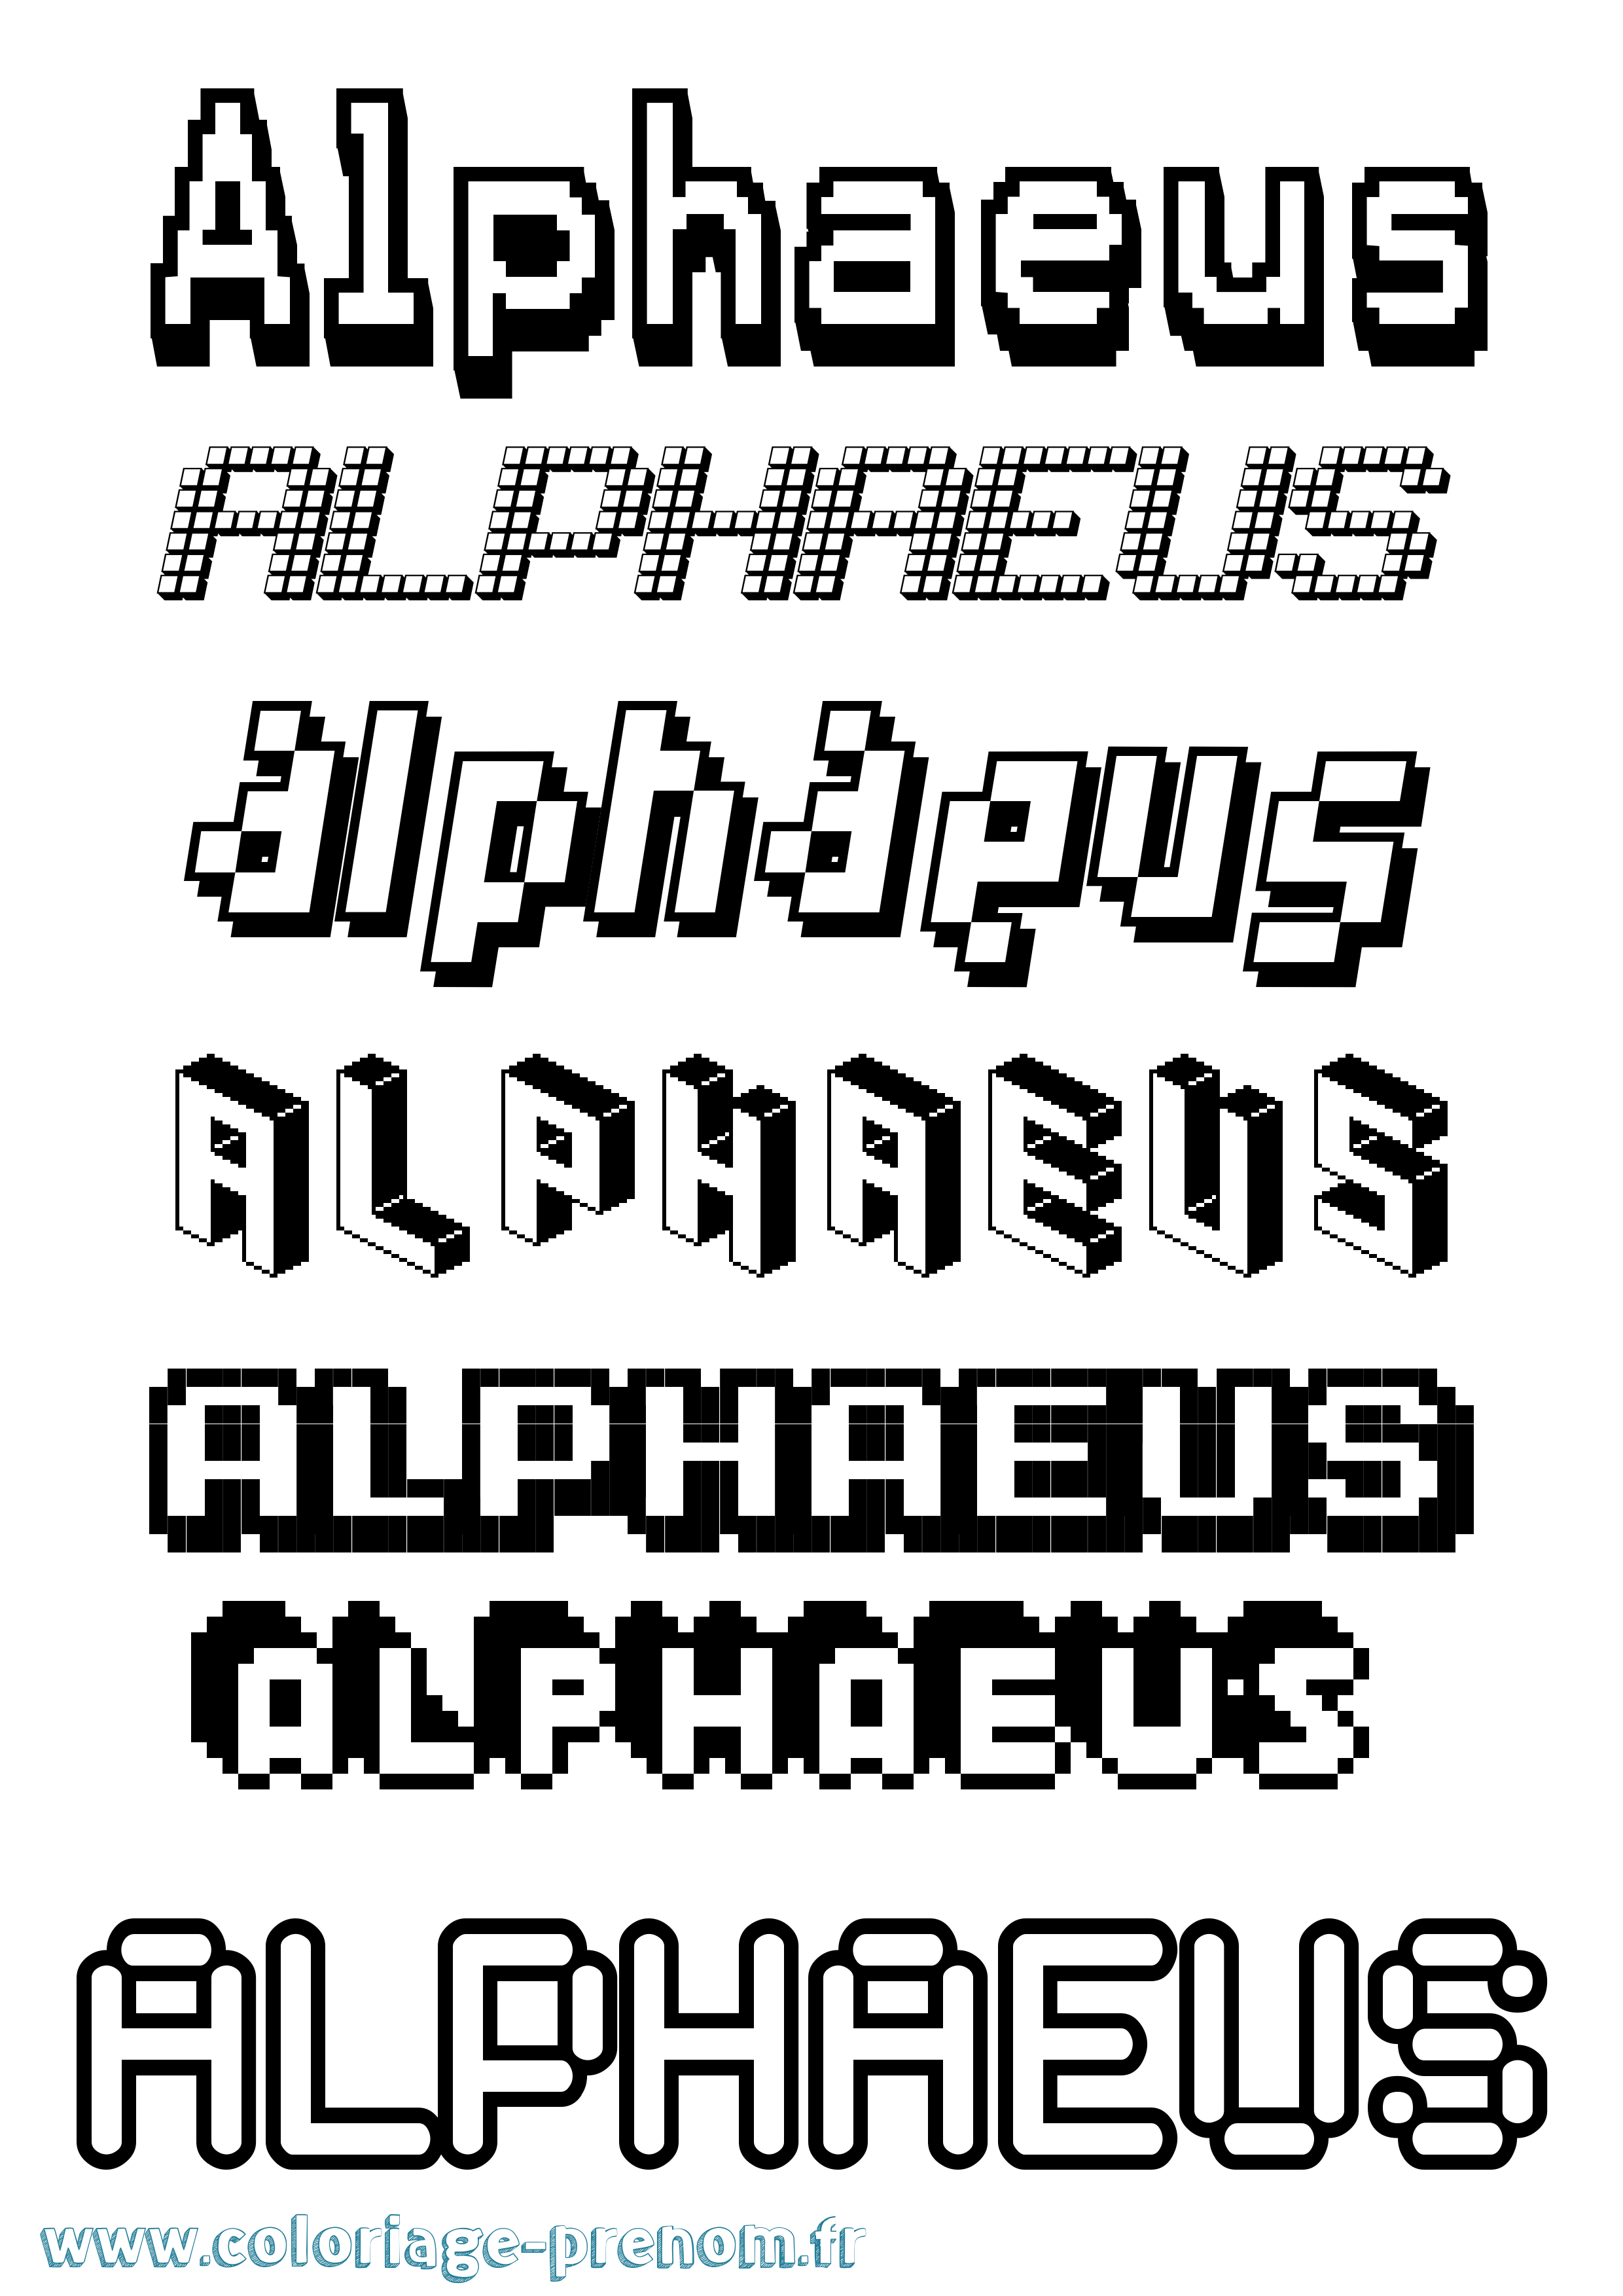 Coloriage prénom Alphaeus Pixel